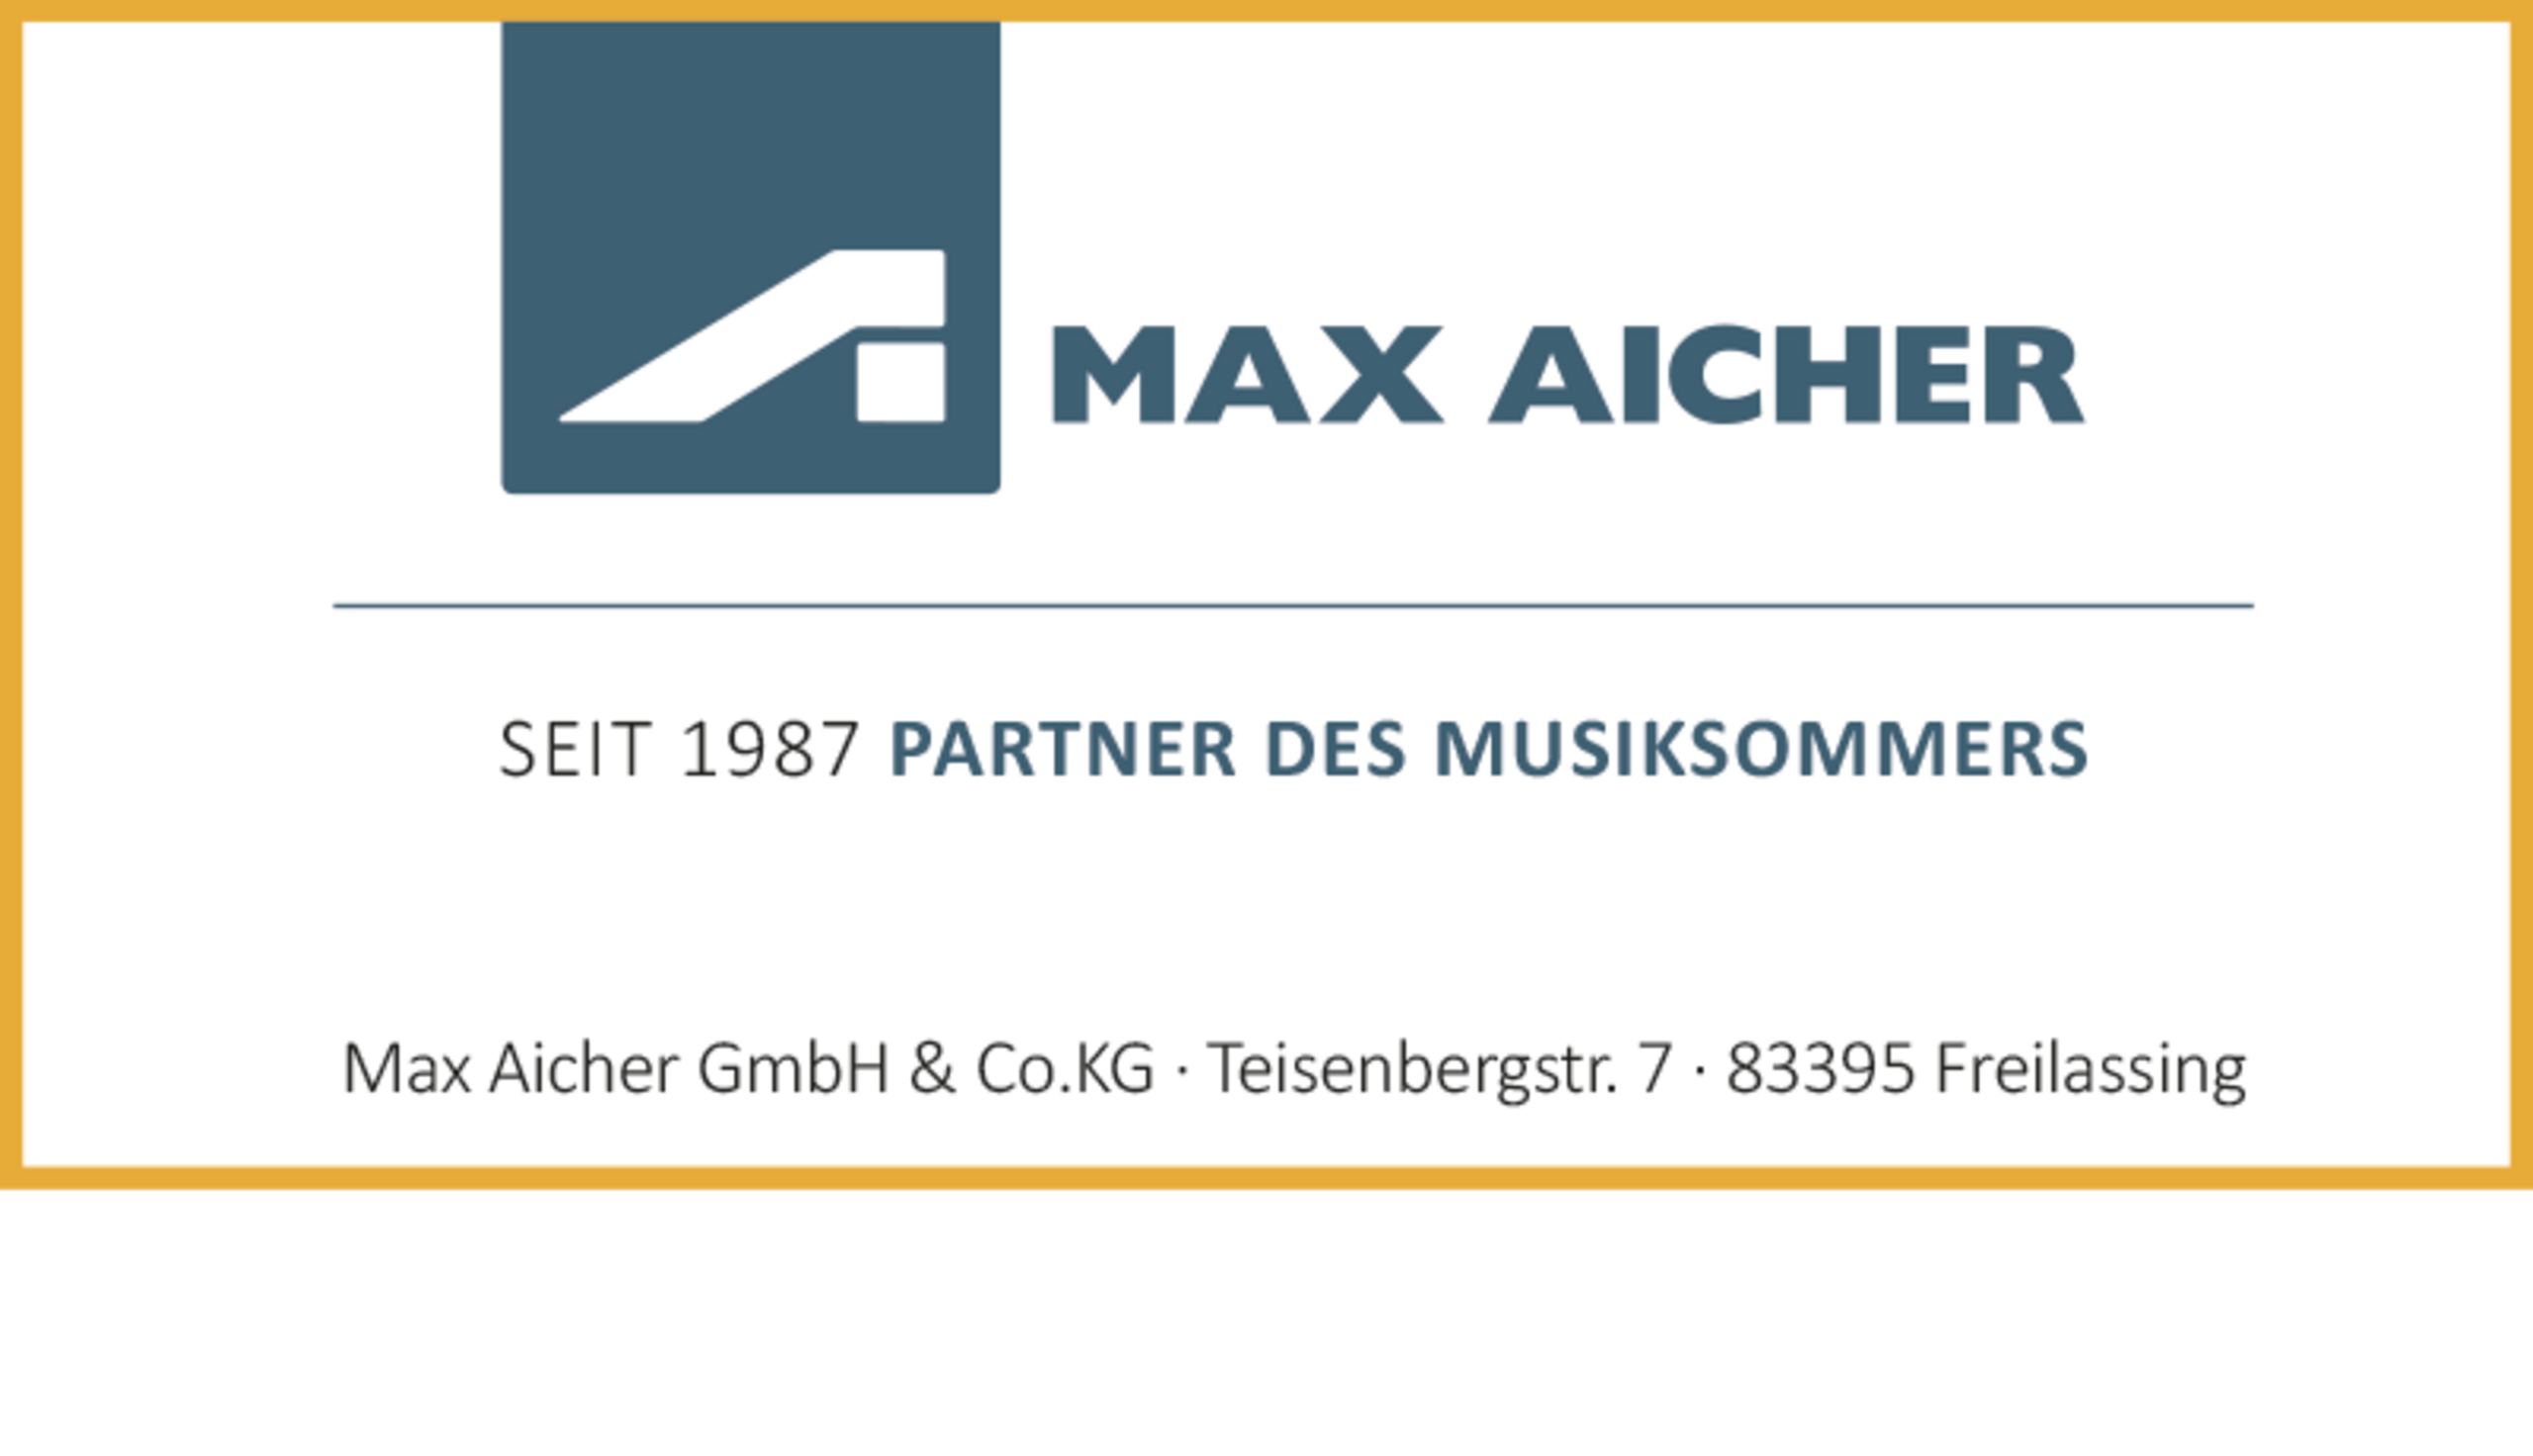 Musiksommer Max Aichner